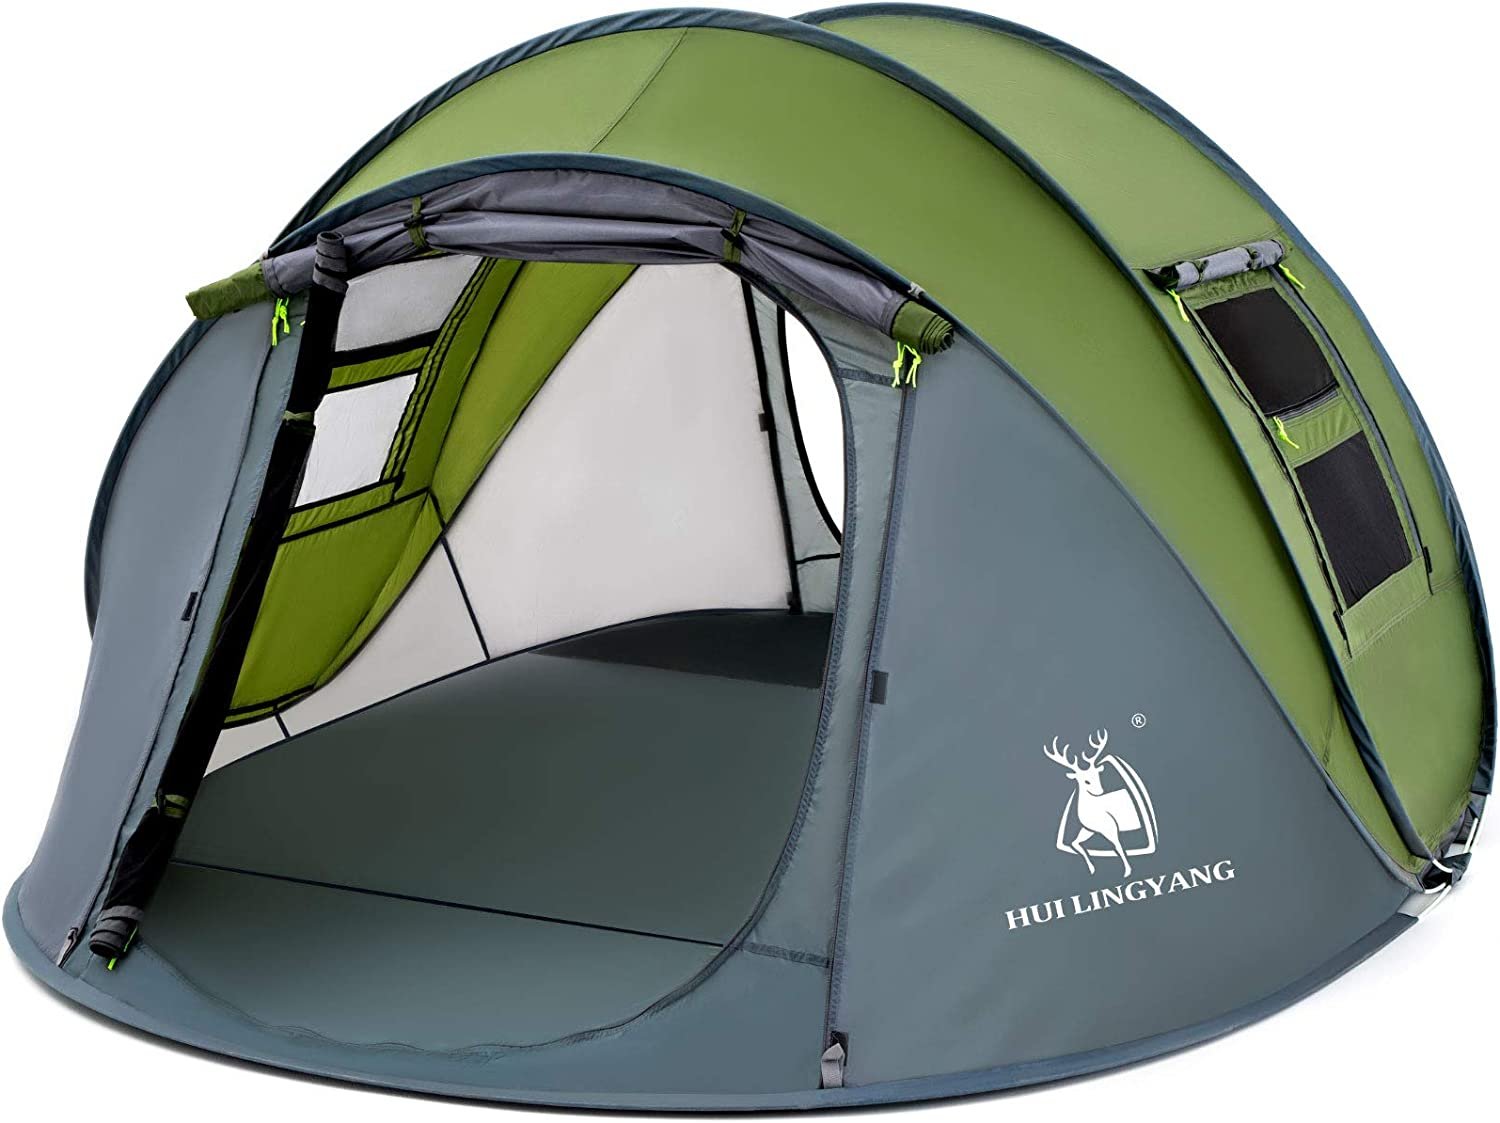 HUI LINGYANG 4 Person Easy Pop Up Tent,9.5â��X6.6â��X52'',Waterproof, Automatic Setup